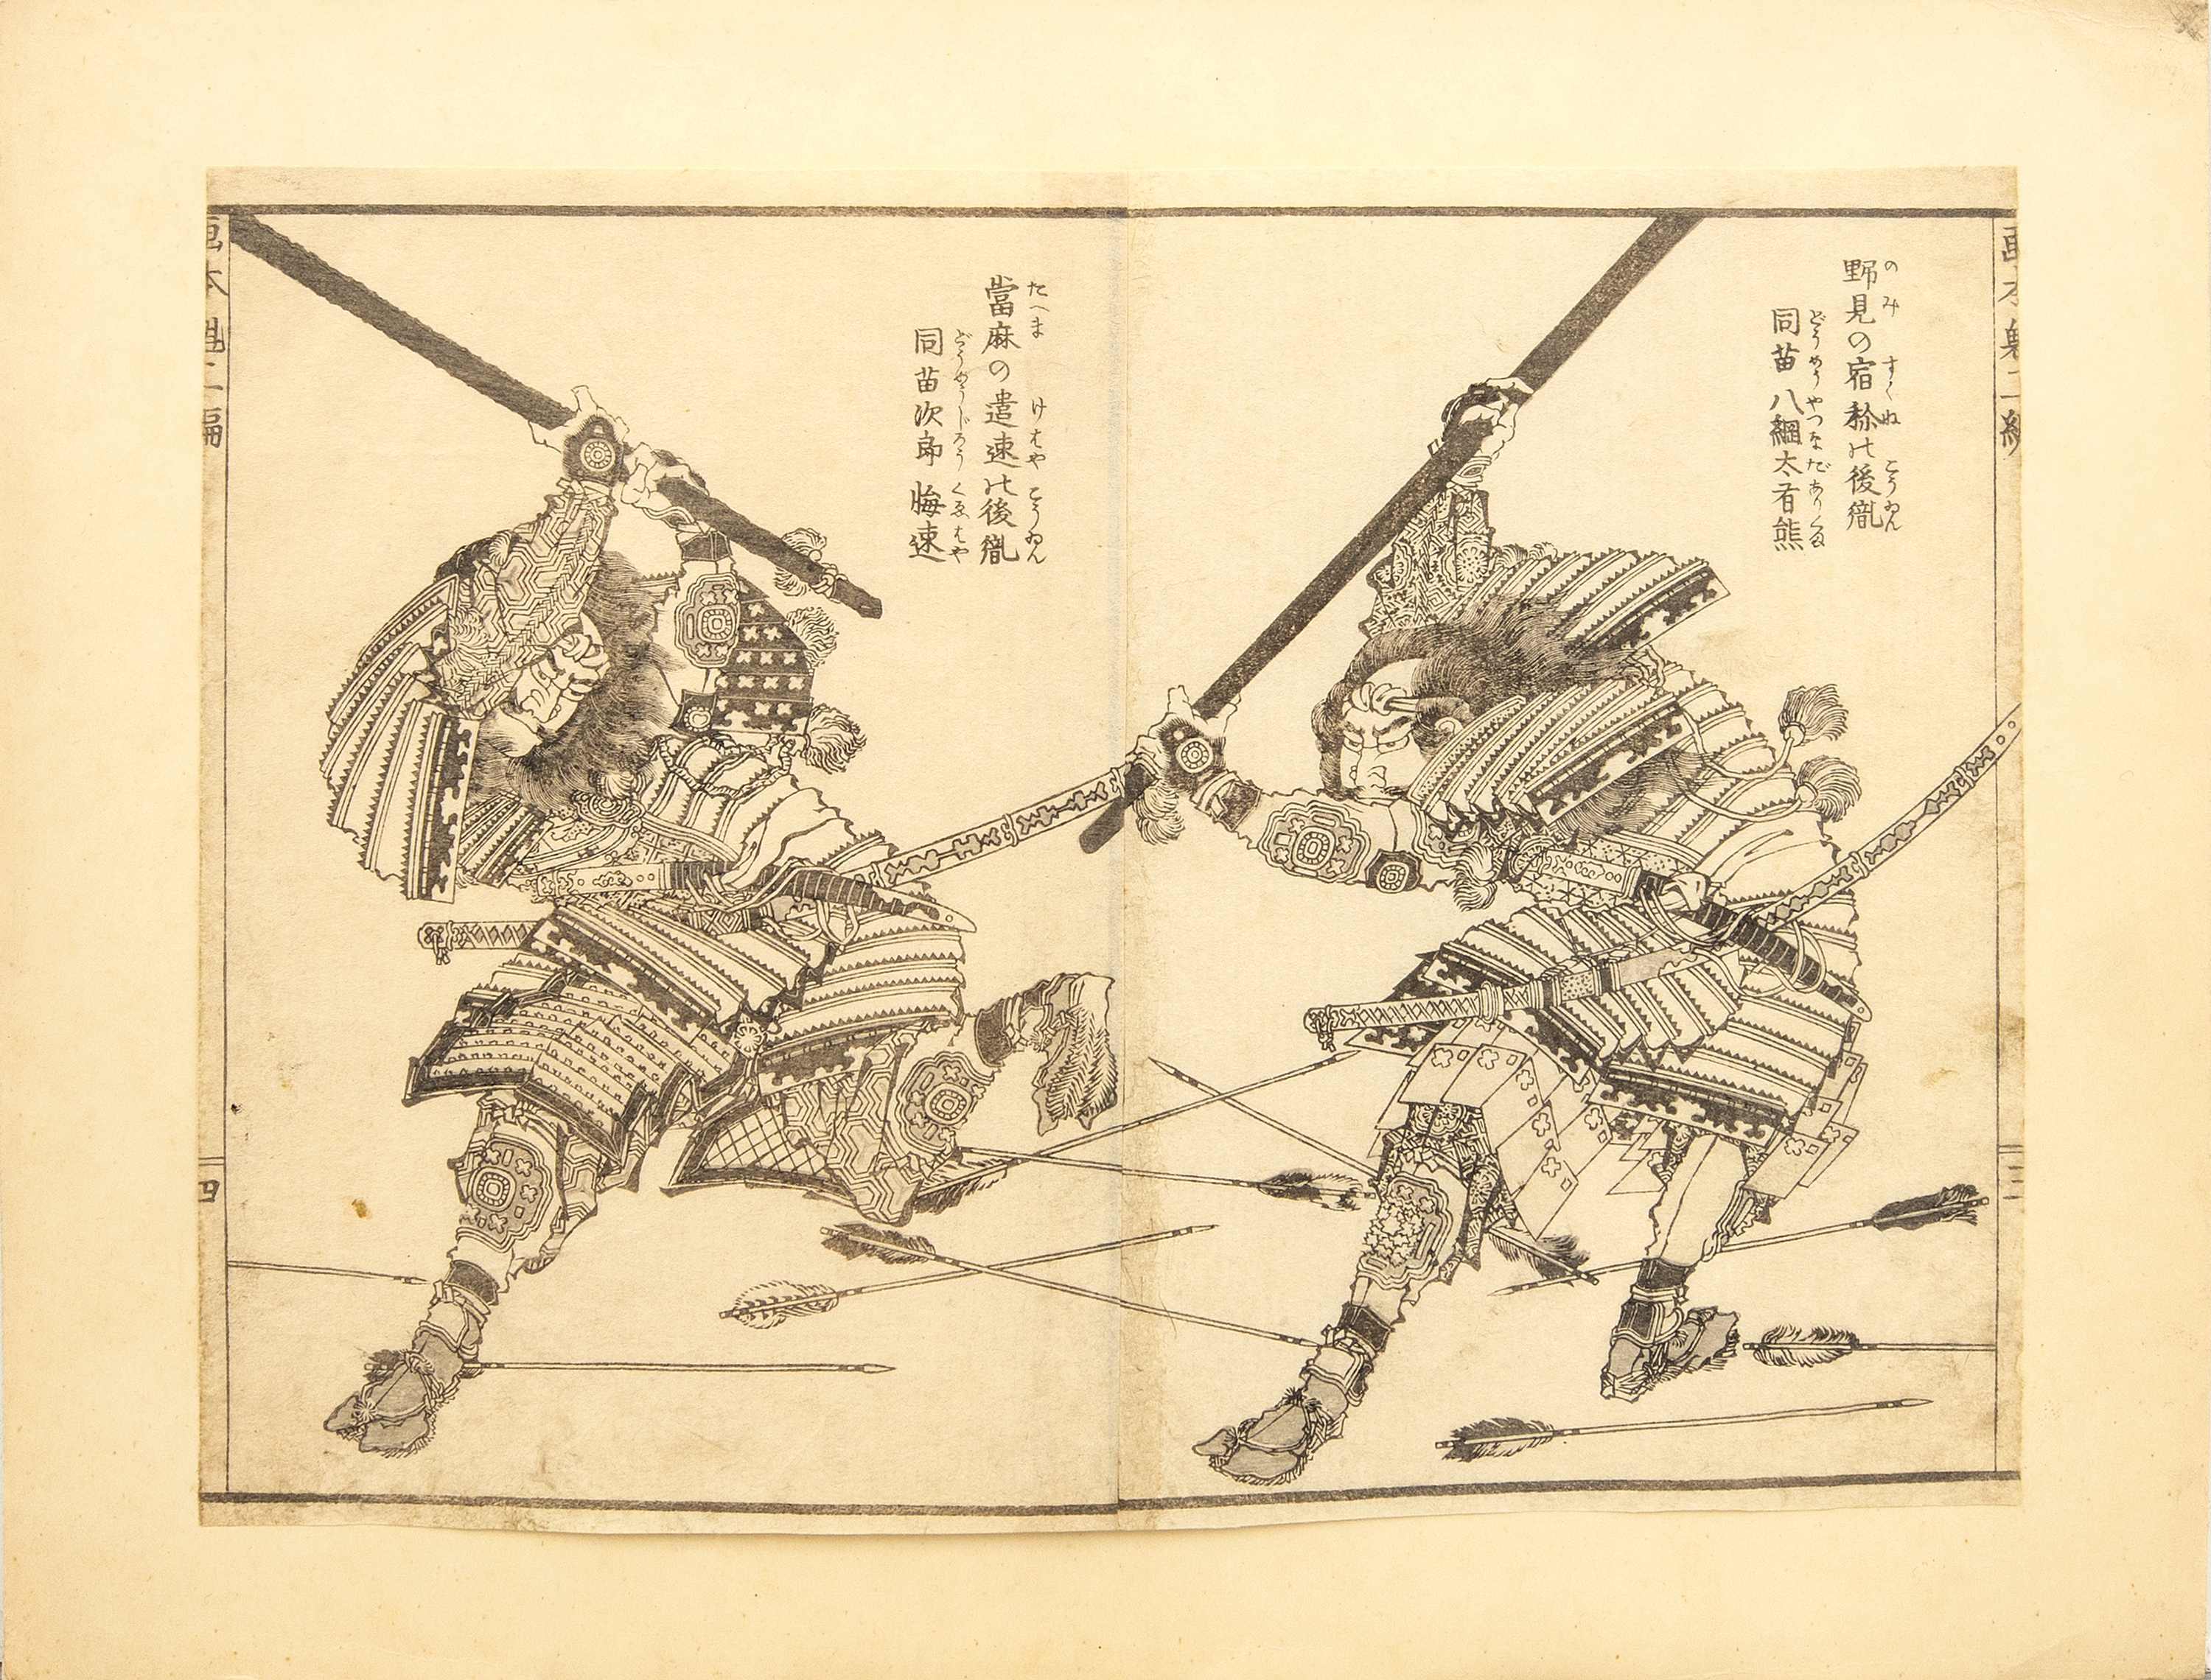 Wakan ehon sakigake sho-hen 和漢絵本魁初編 (Picture Book of the Warrior Vanguard in Japan and China (vol. 2) by Katsushika Hokusai, 1836